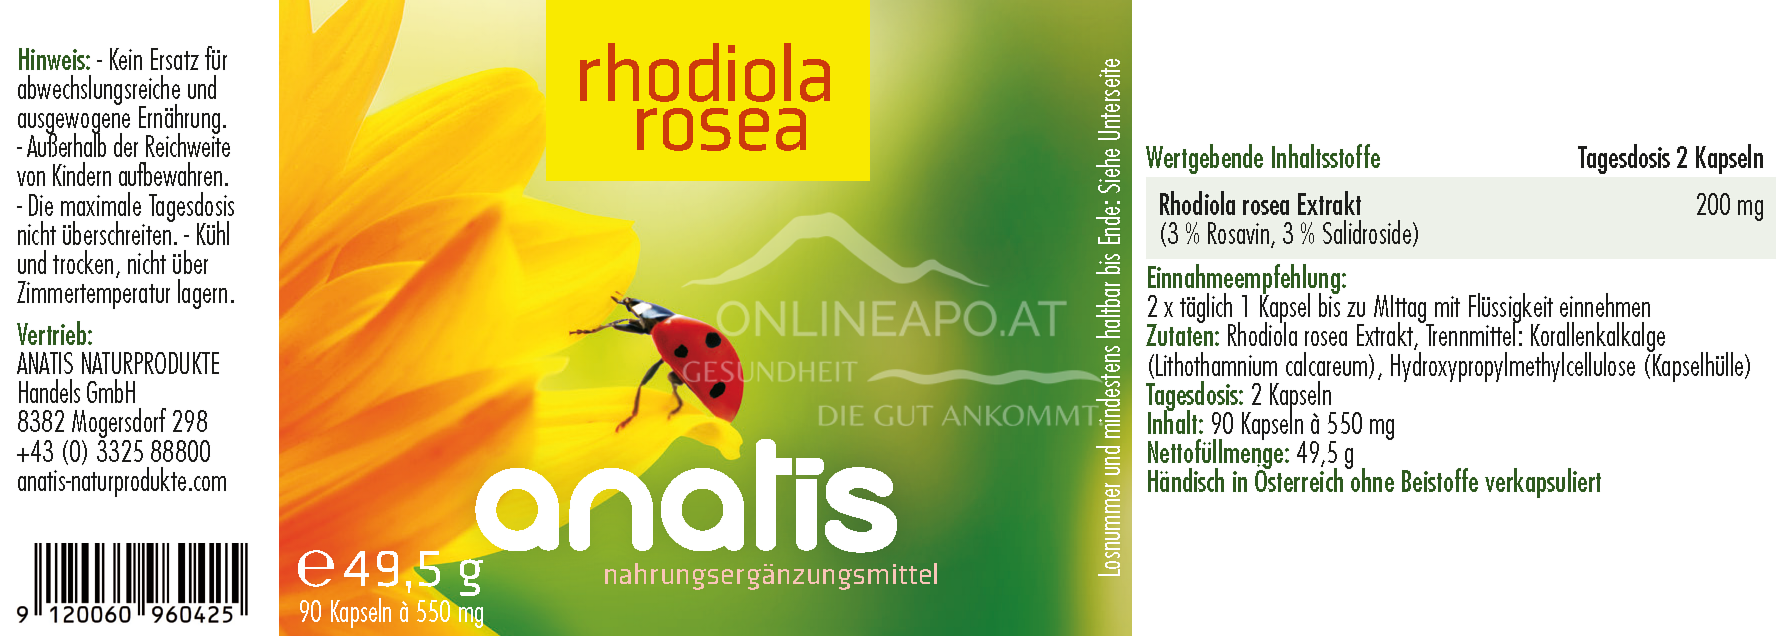 anatis Rhodiola rosea Kapseln